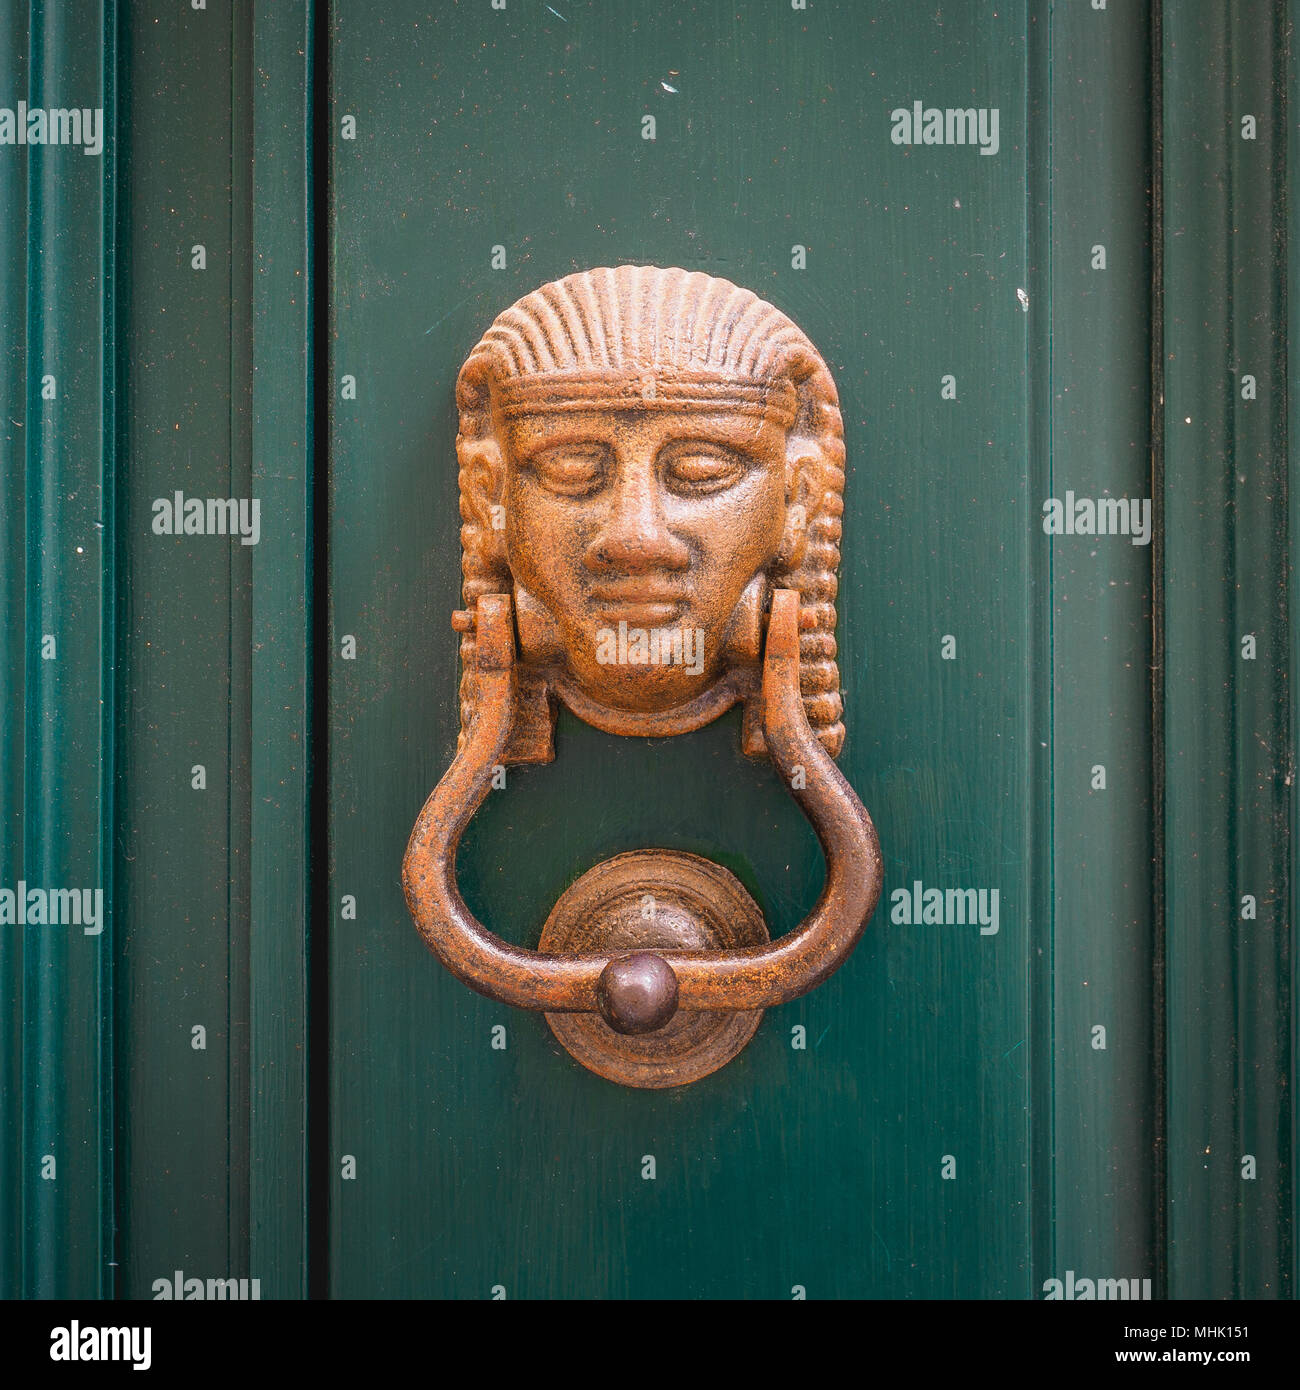 Brass door knocker representing an ancient Egyptian head on a dark green wooden door. Squared format. Stock Photo